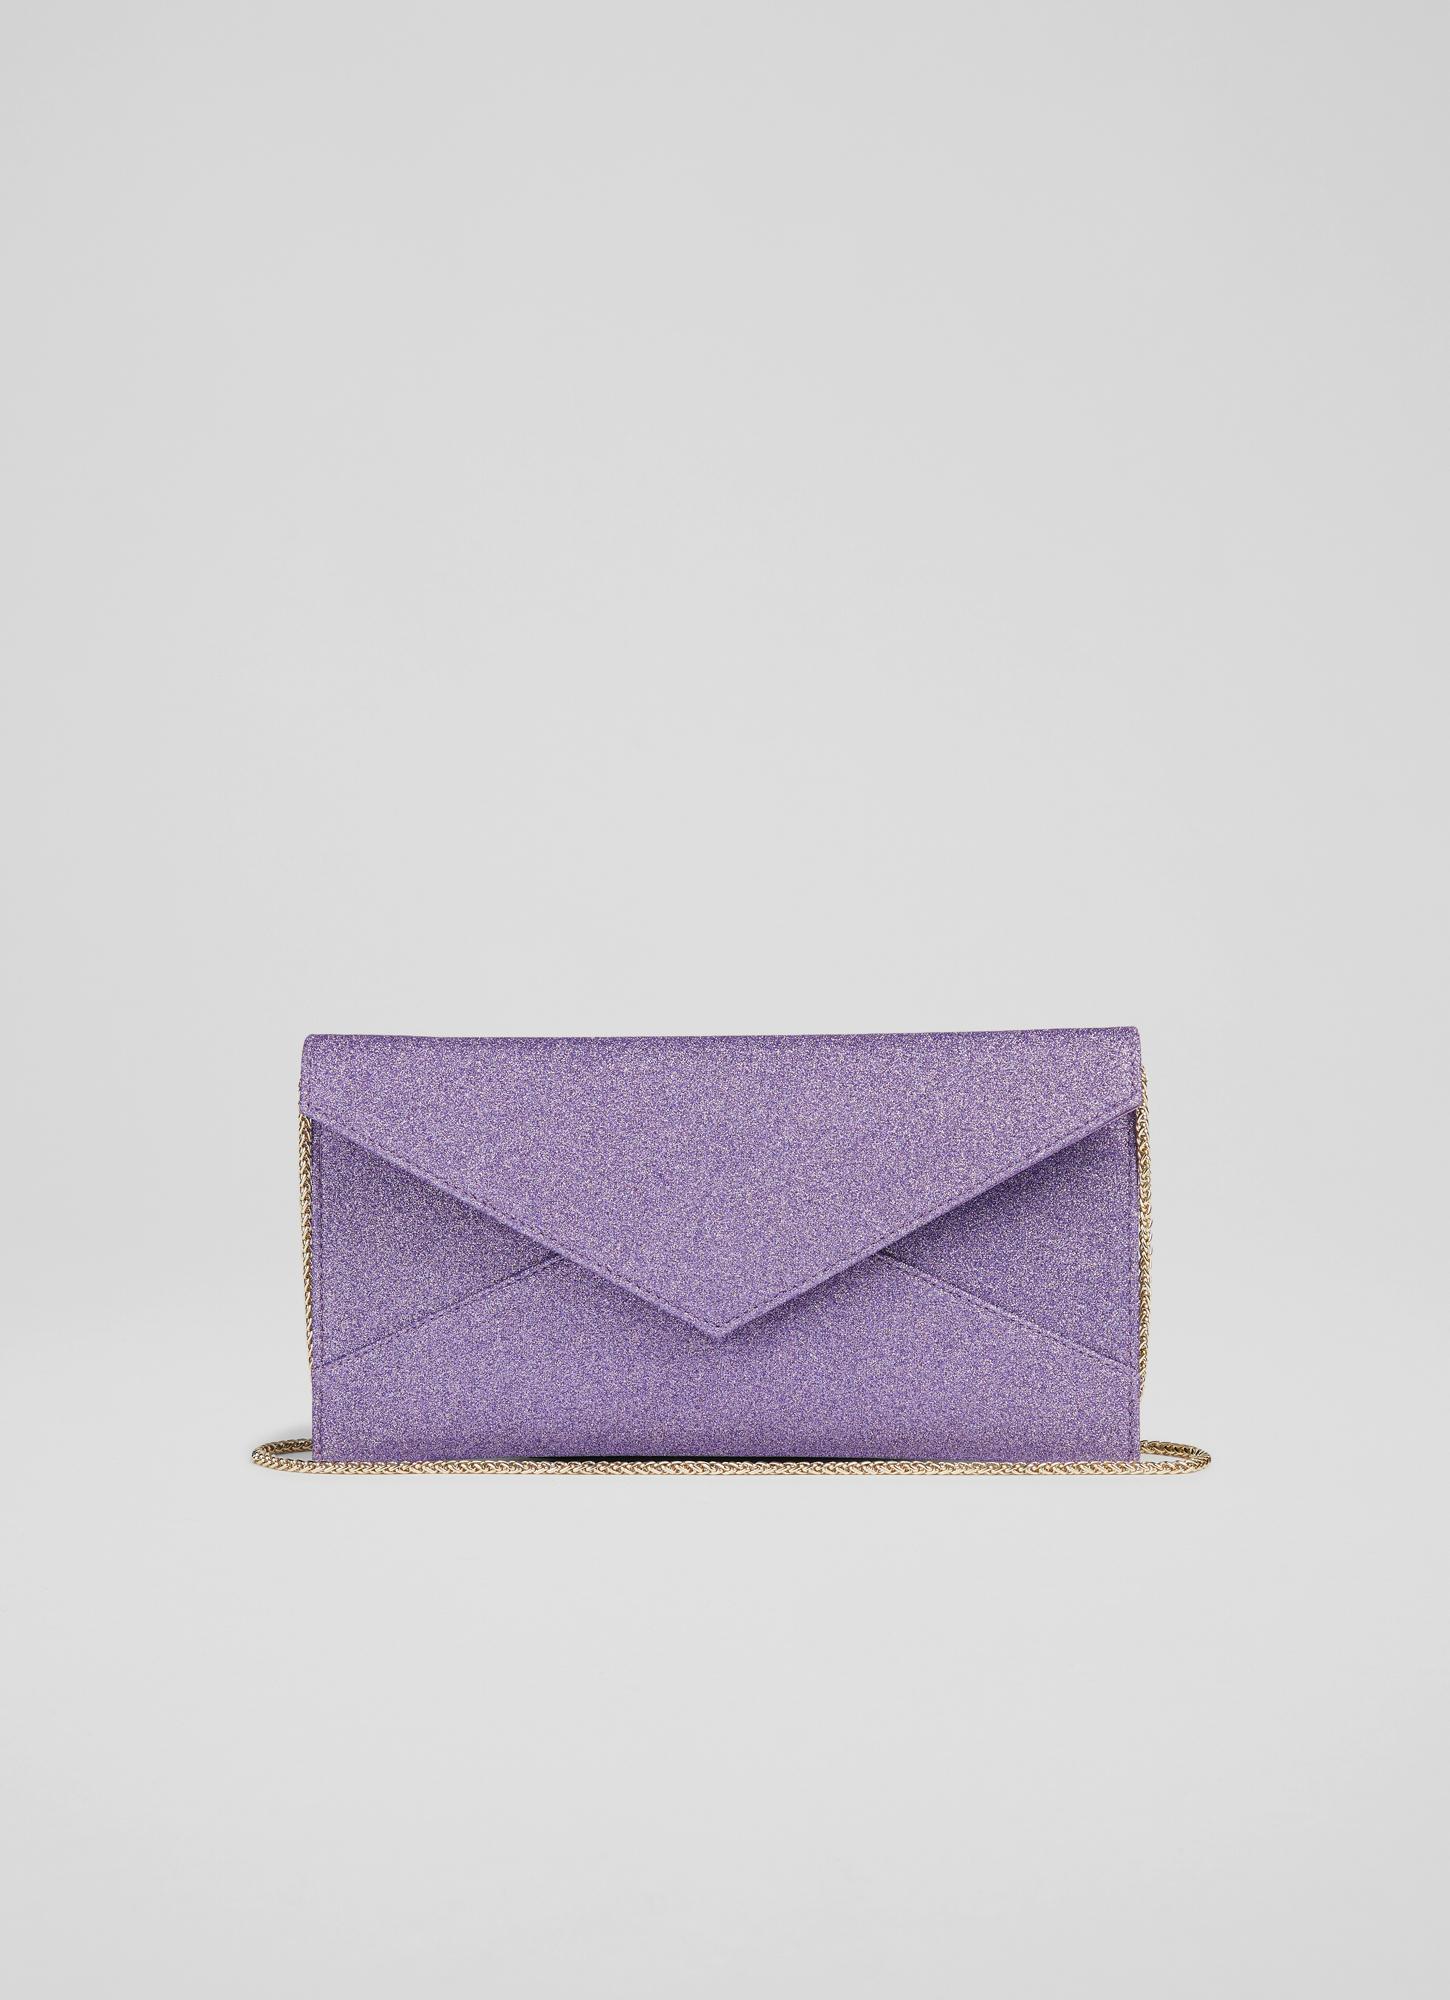 L.K.Bennett Kendall Lilac Glitter Fabric Clutch Bag Lavender, Lavender